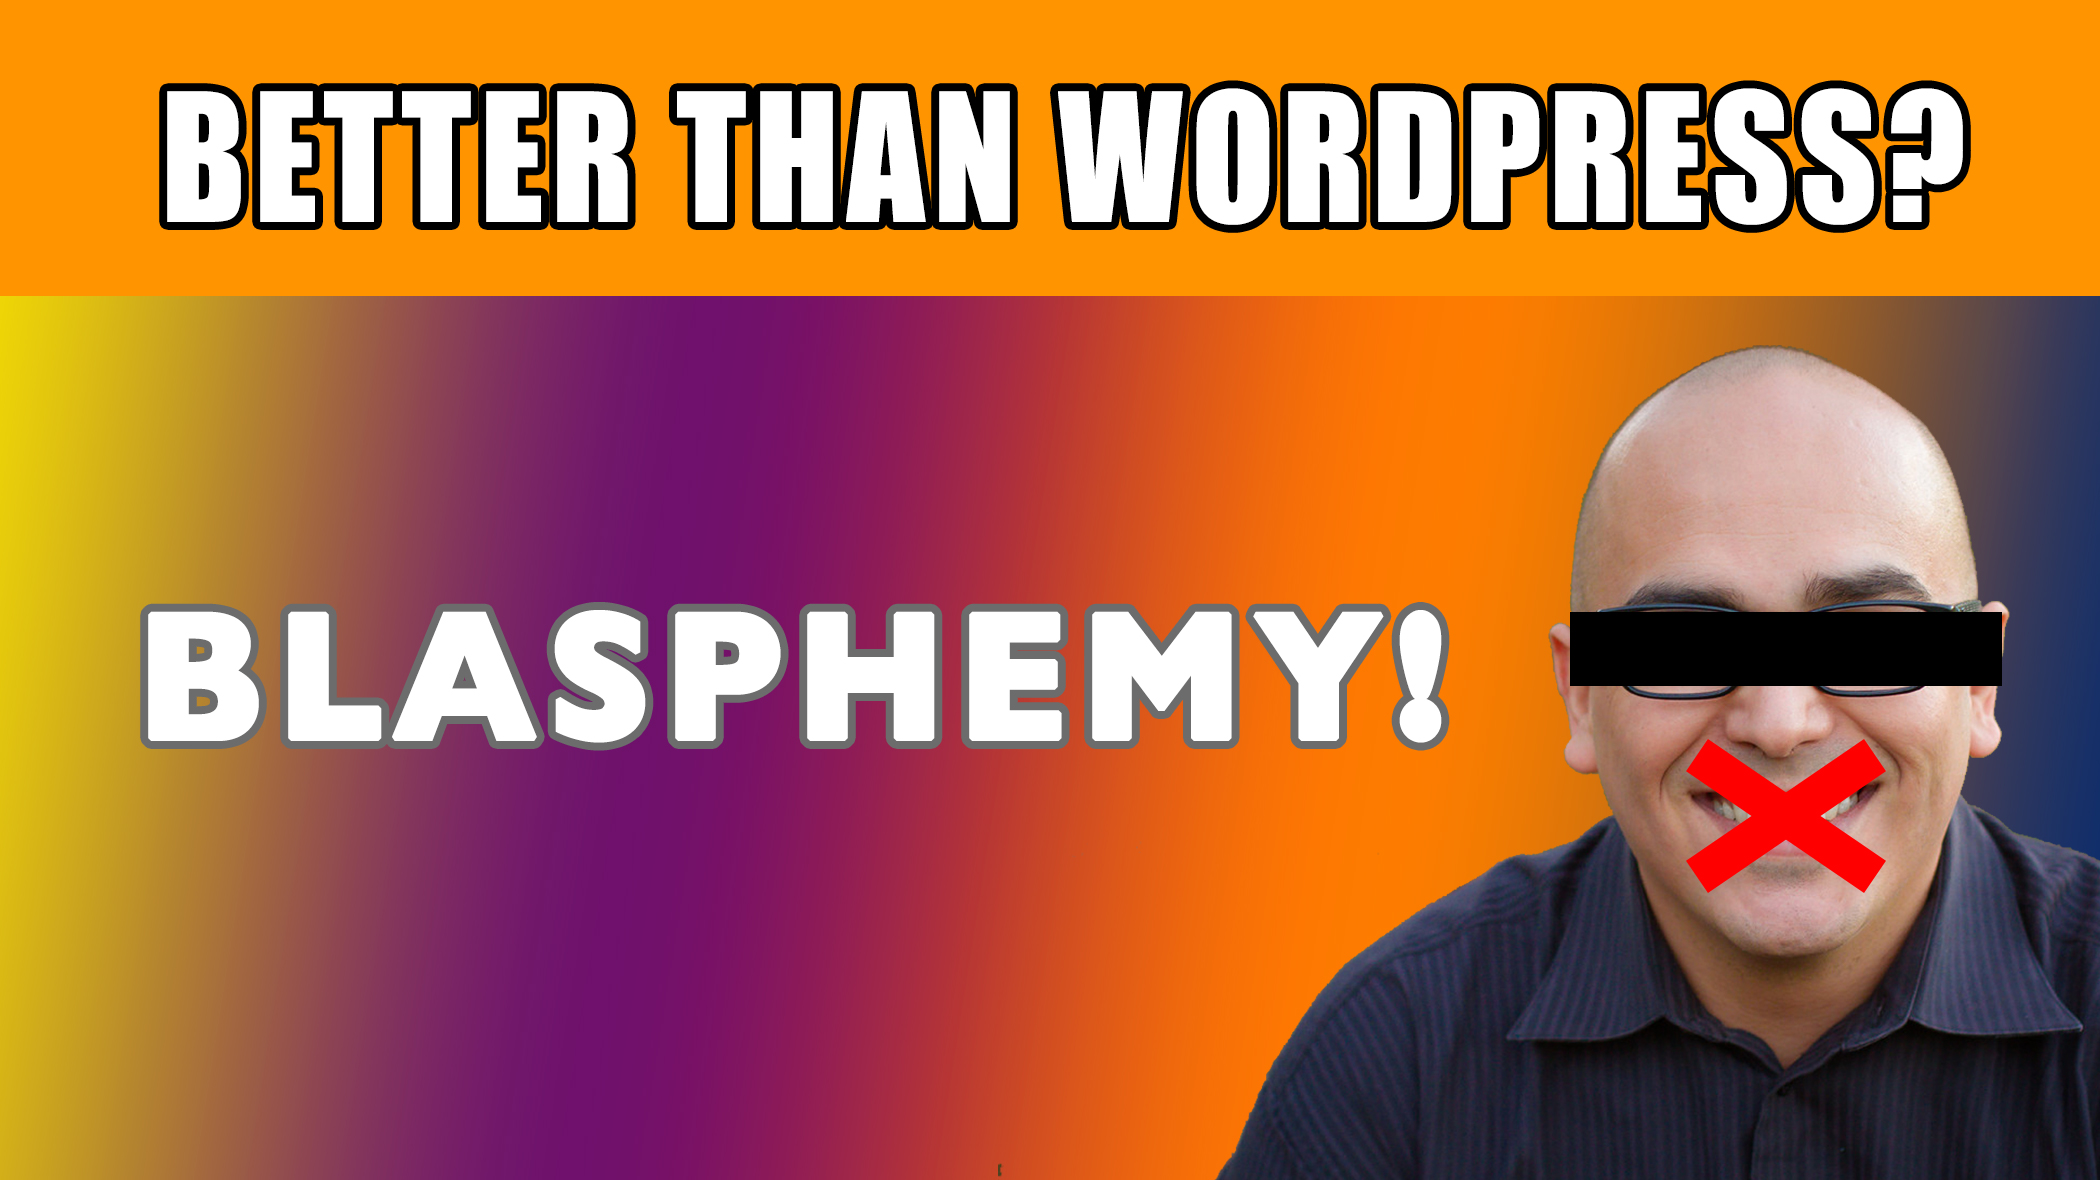 Better Than WordPress? That’s Blasphemous!